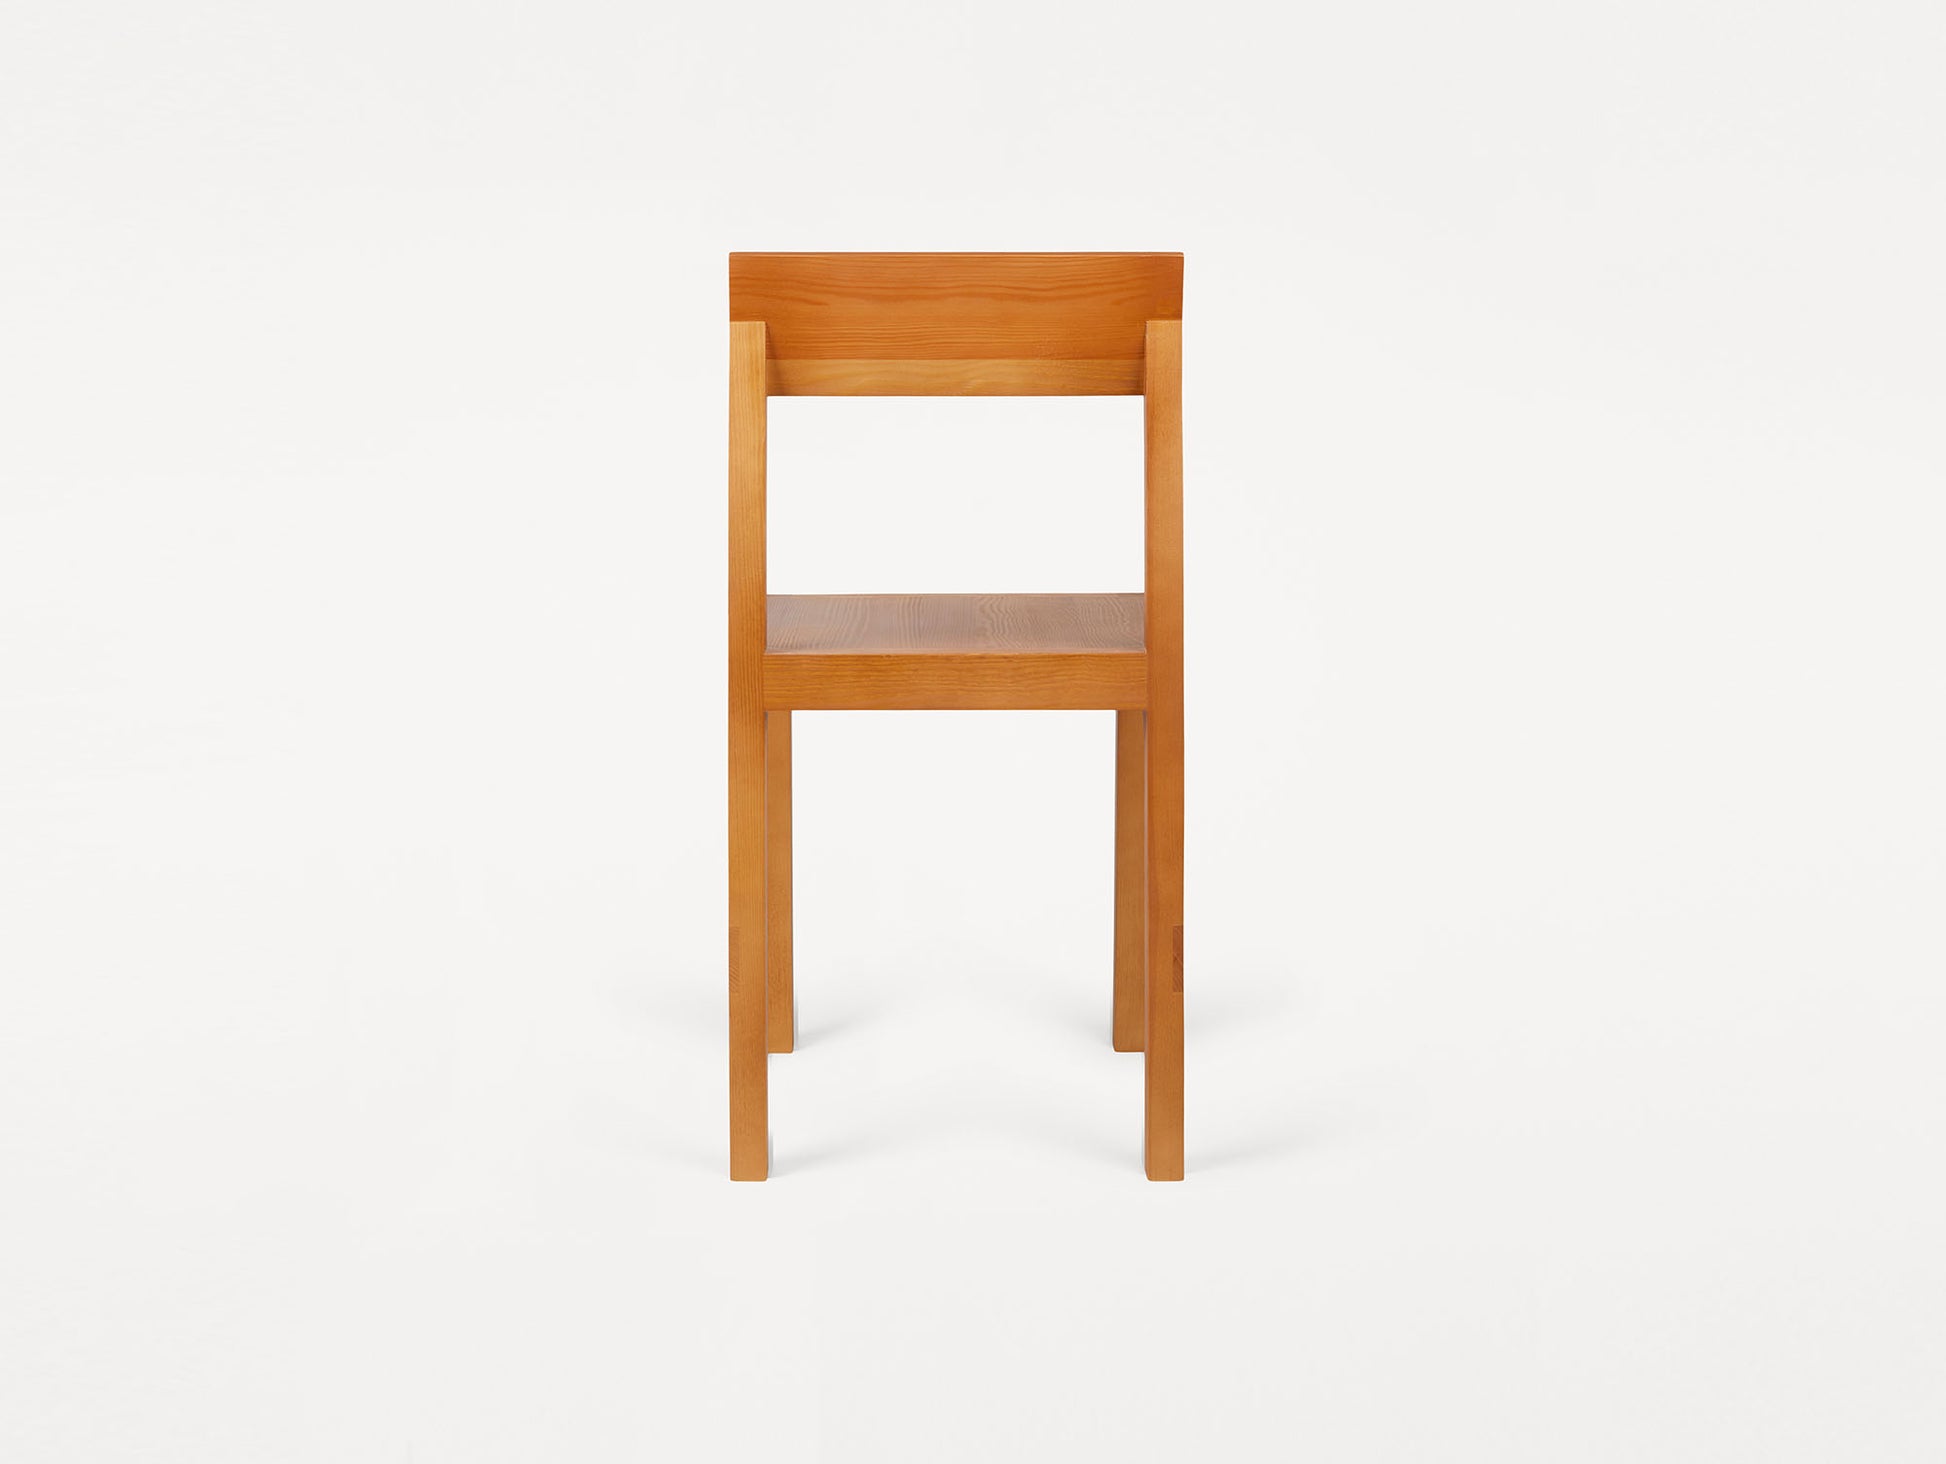 Bracket Chair by Frama - Warm Brown